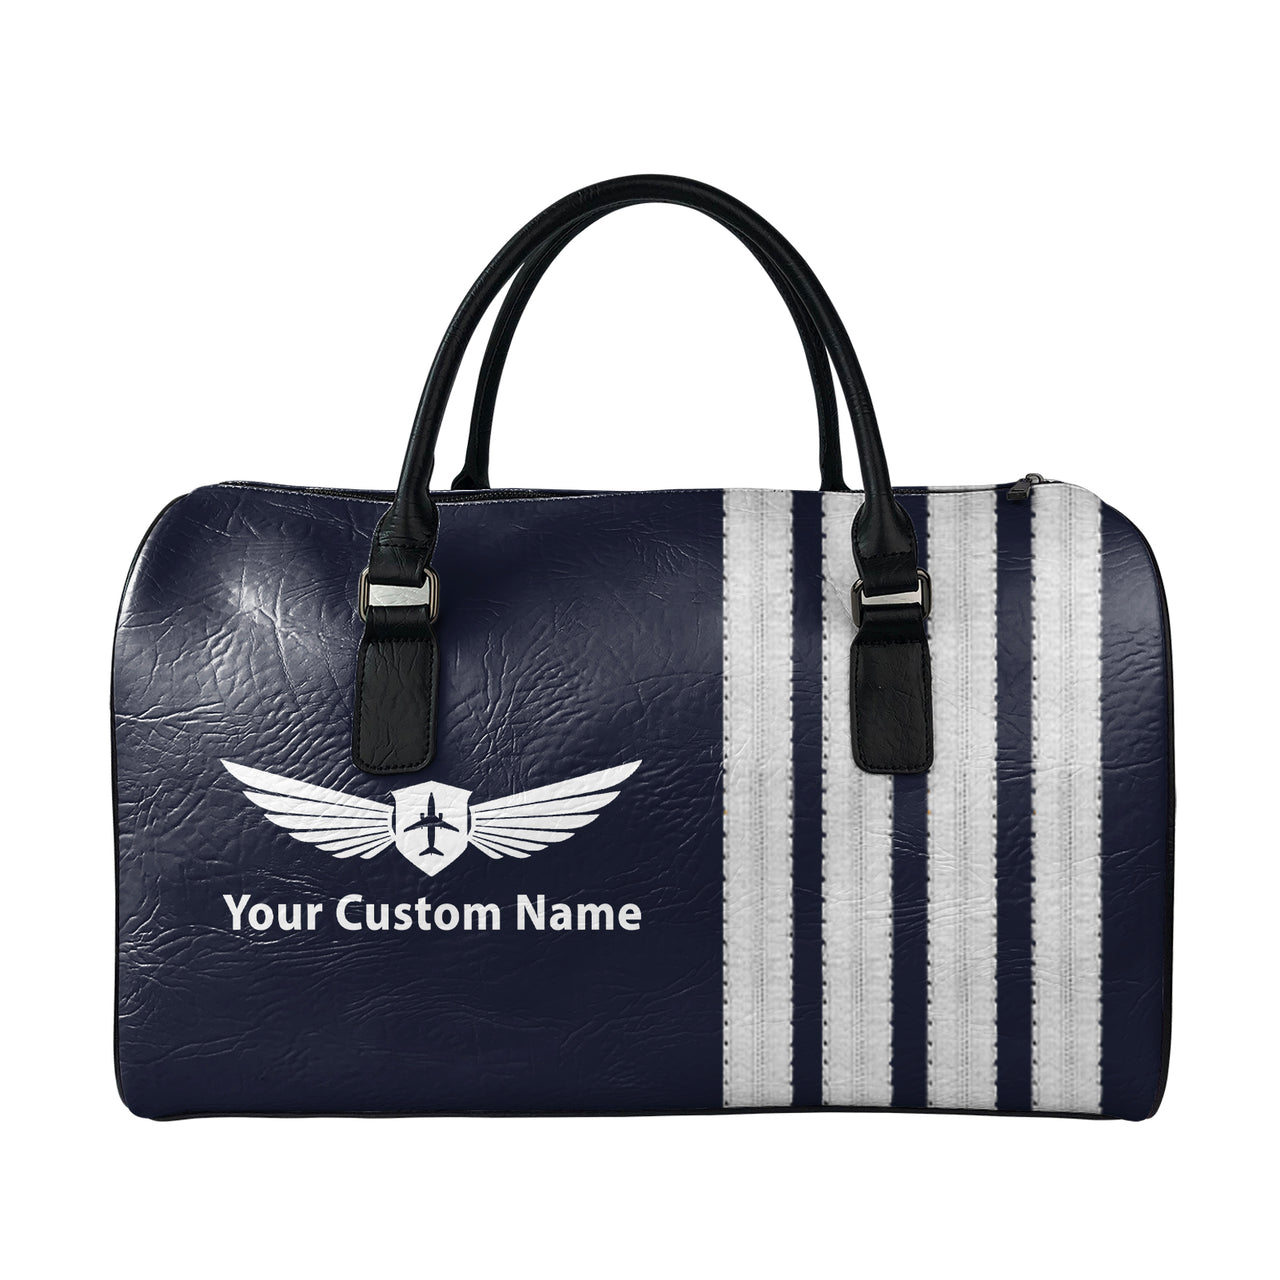 Name & Badge & Silver Special Pilot Epaulettes (4,3,2 Lines) Designed Leather Travel Bag